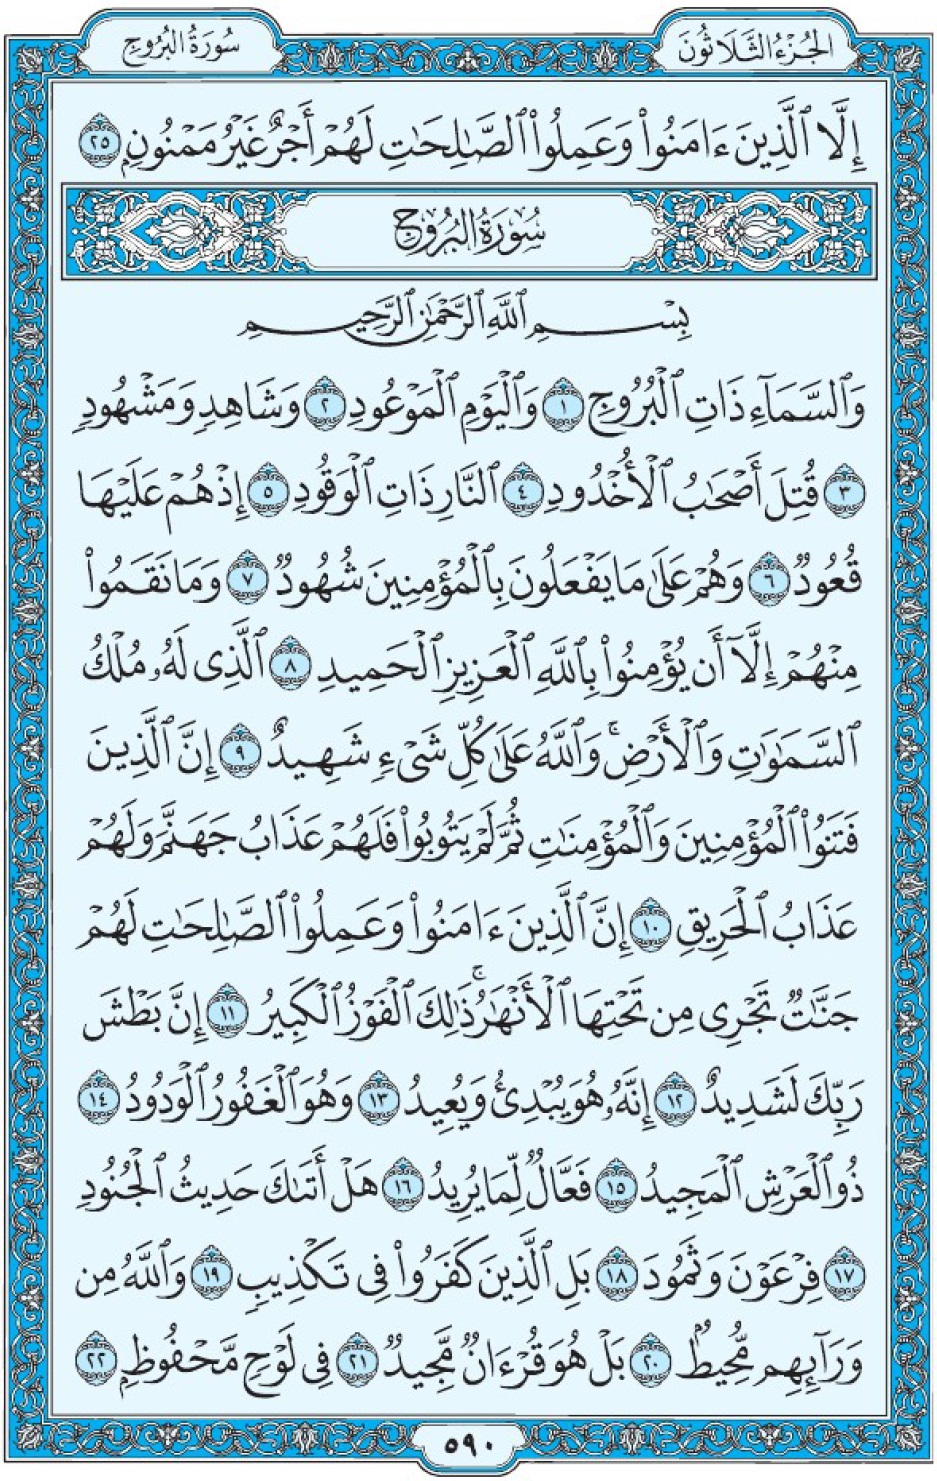 Коран Мединский мусхаф страница 590 сура 85 аль-Бурудж, سورة ٨٥ البروج 